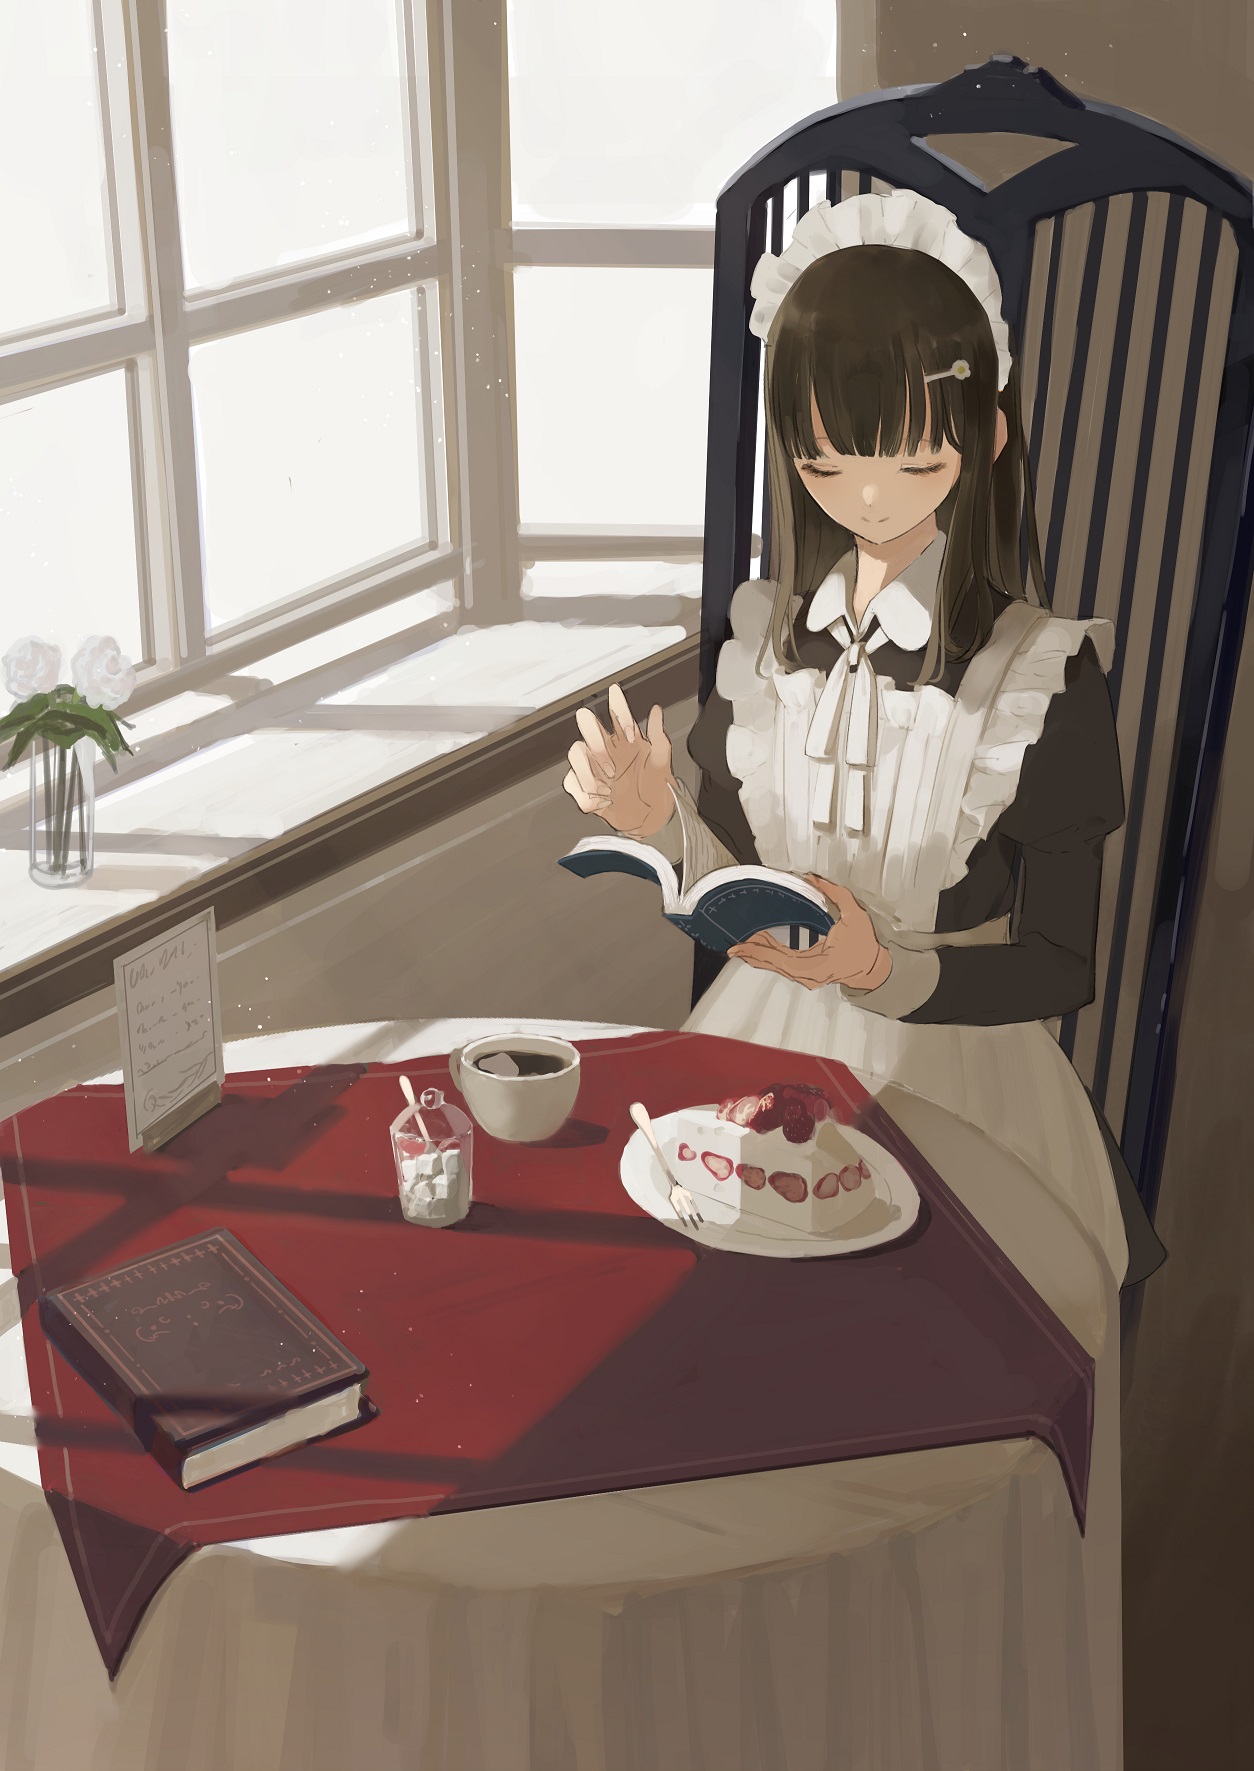 Anime 1254x1771 anime anime girls digital art artwork 2D portrait display Shii maid outfit maid cake reading